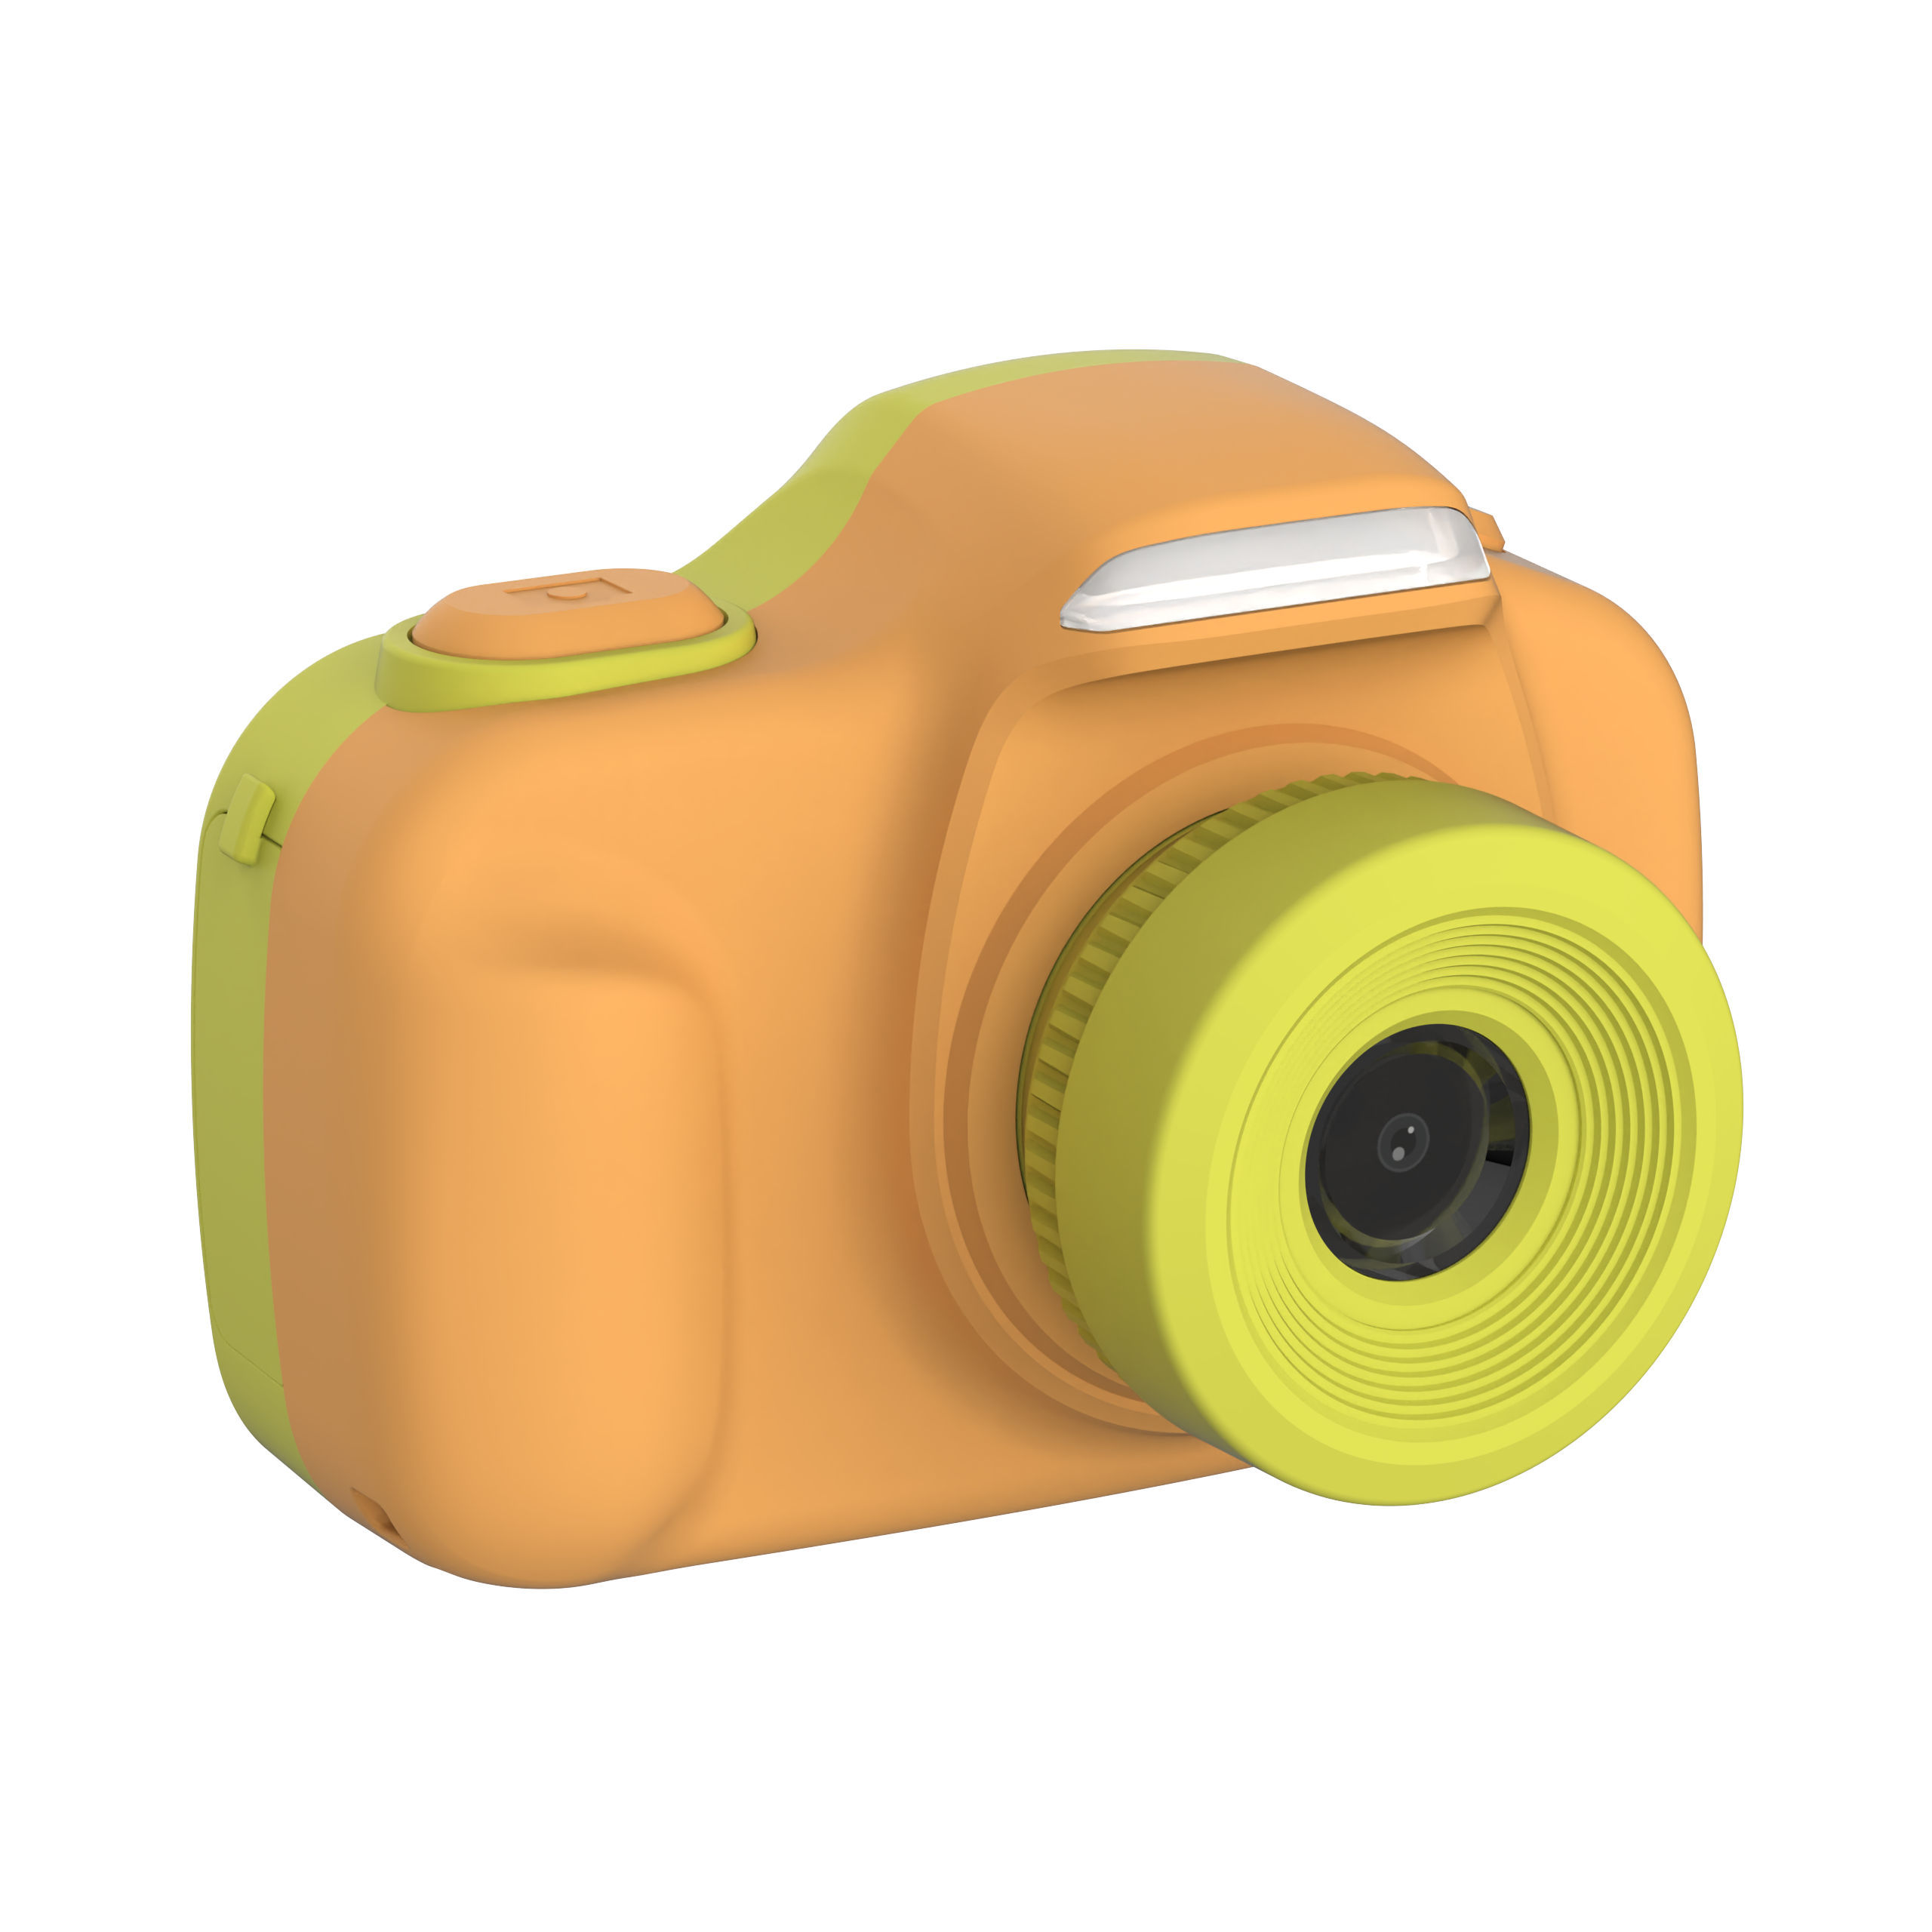 orange and yellow camera for kids